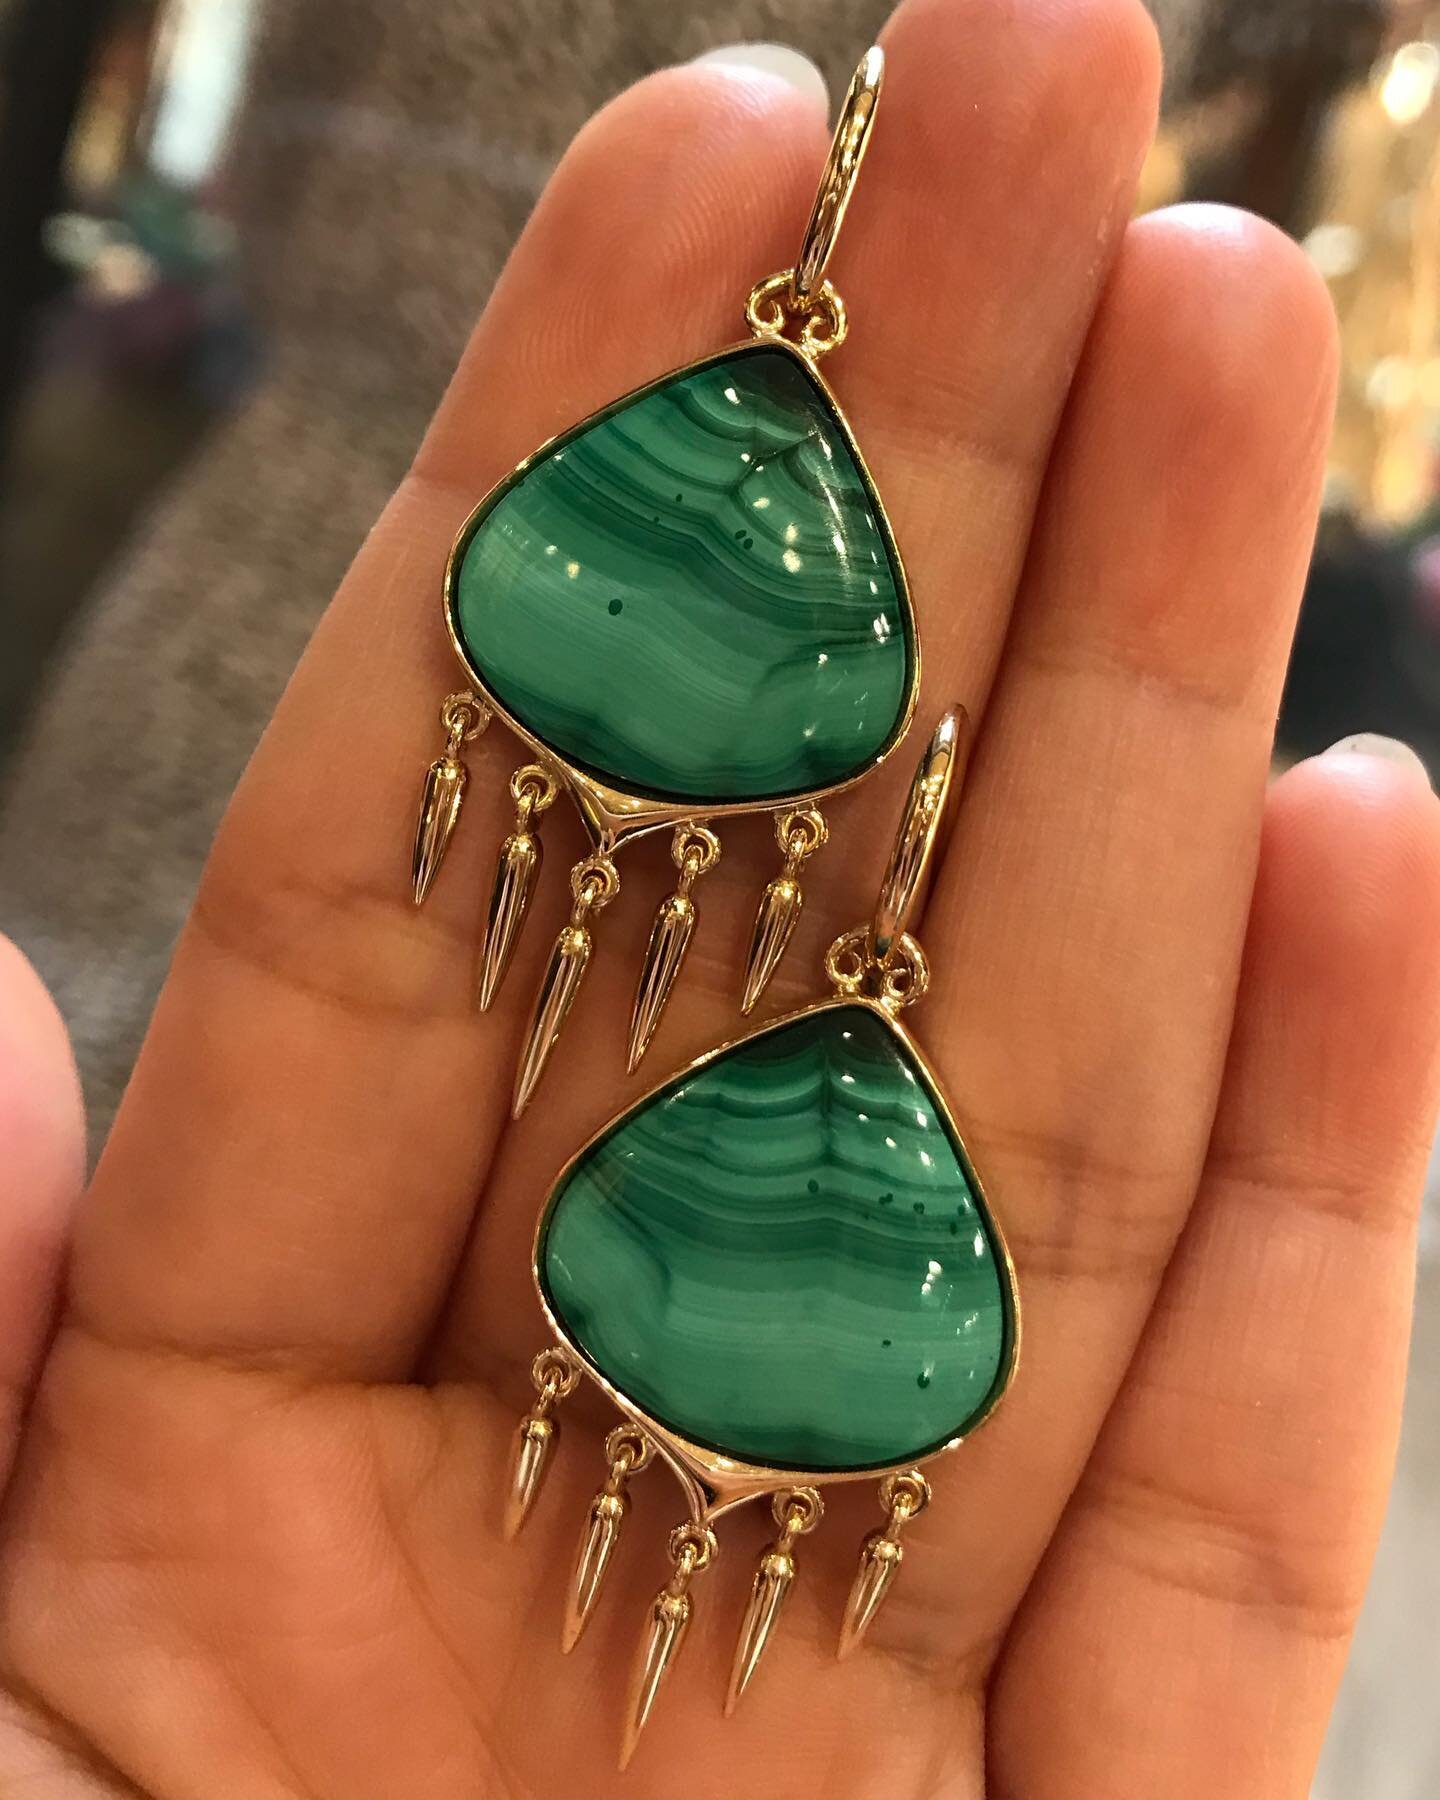 Manifesting balance and abundance with these Malachite earrings 🙏